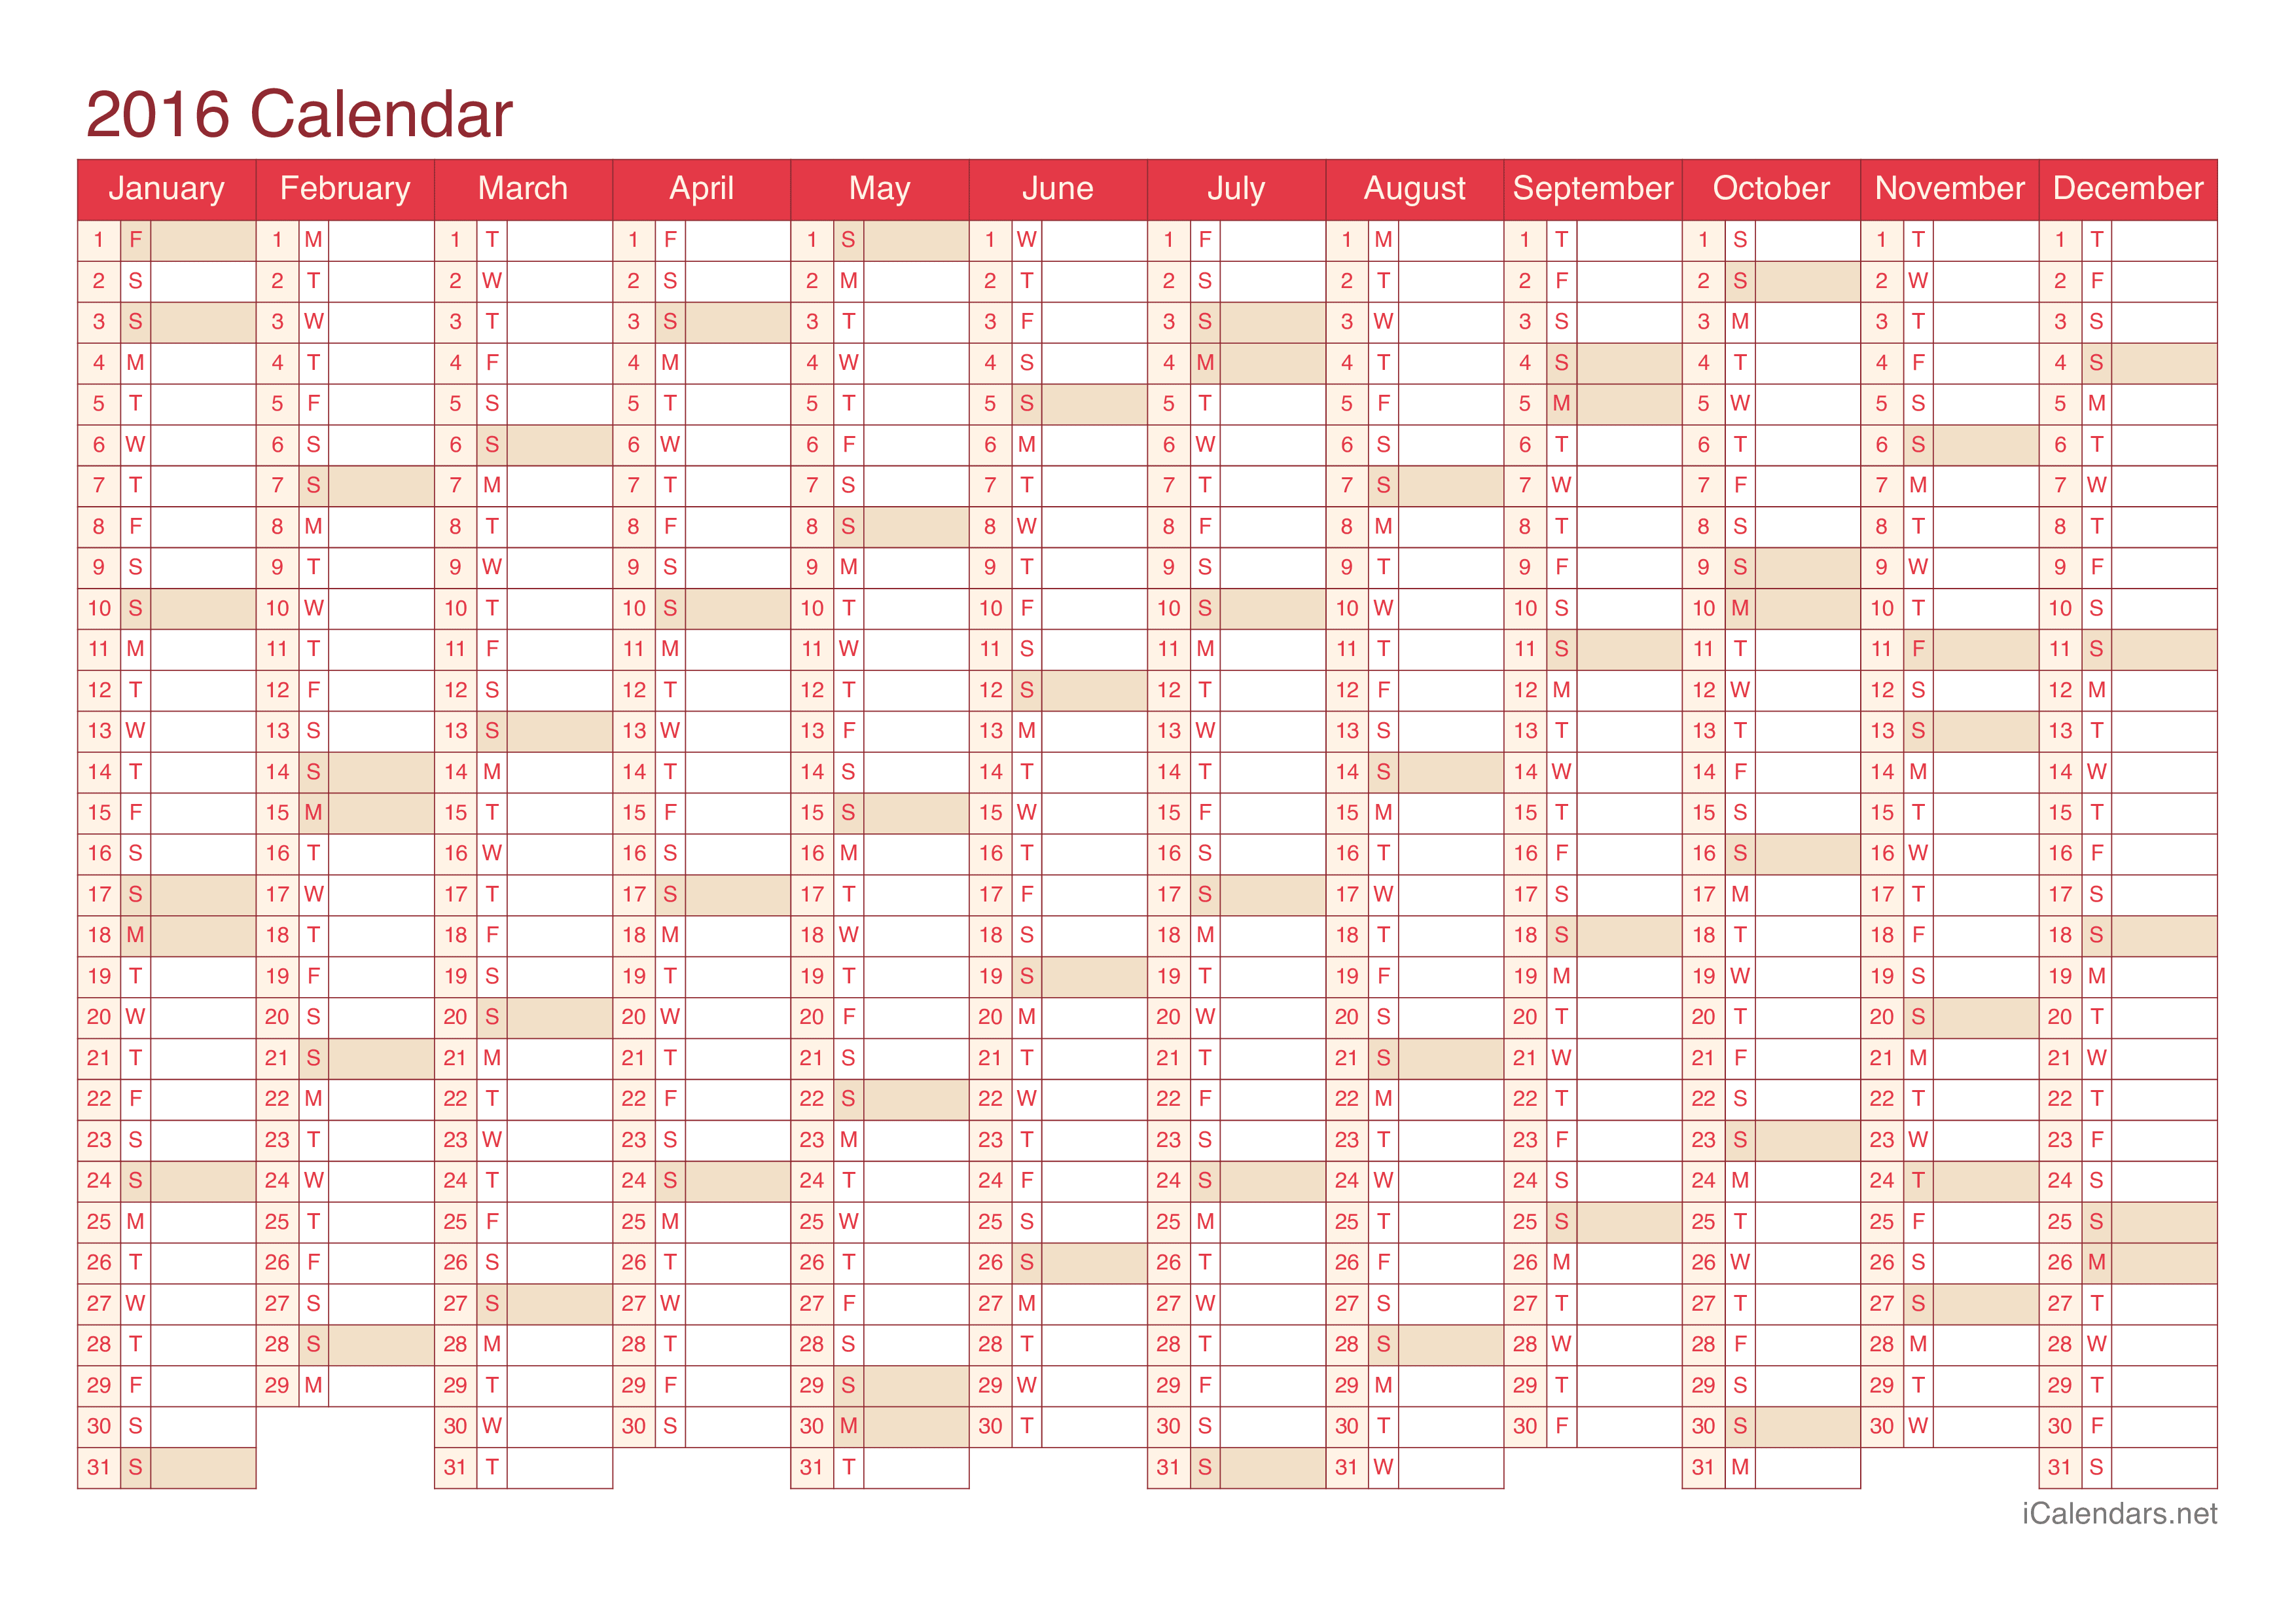 2016 Calendar - Cherry